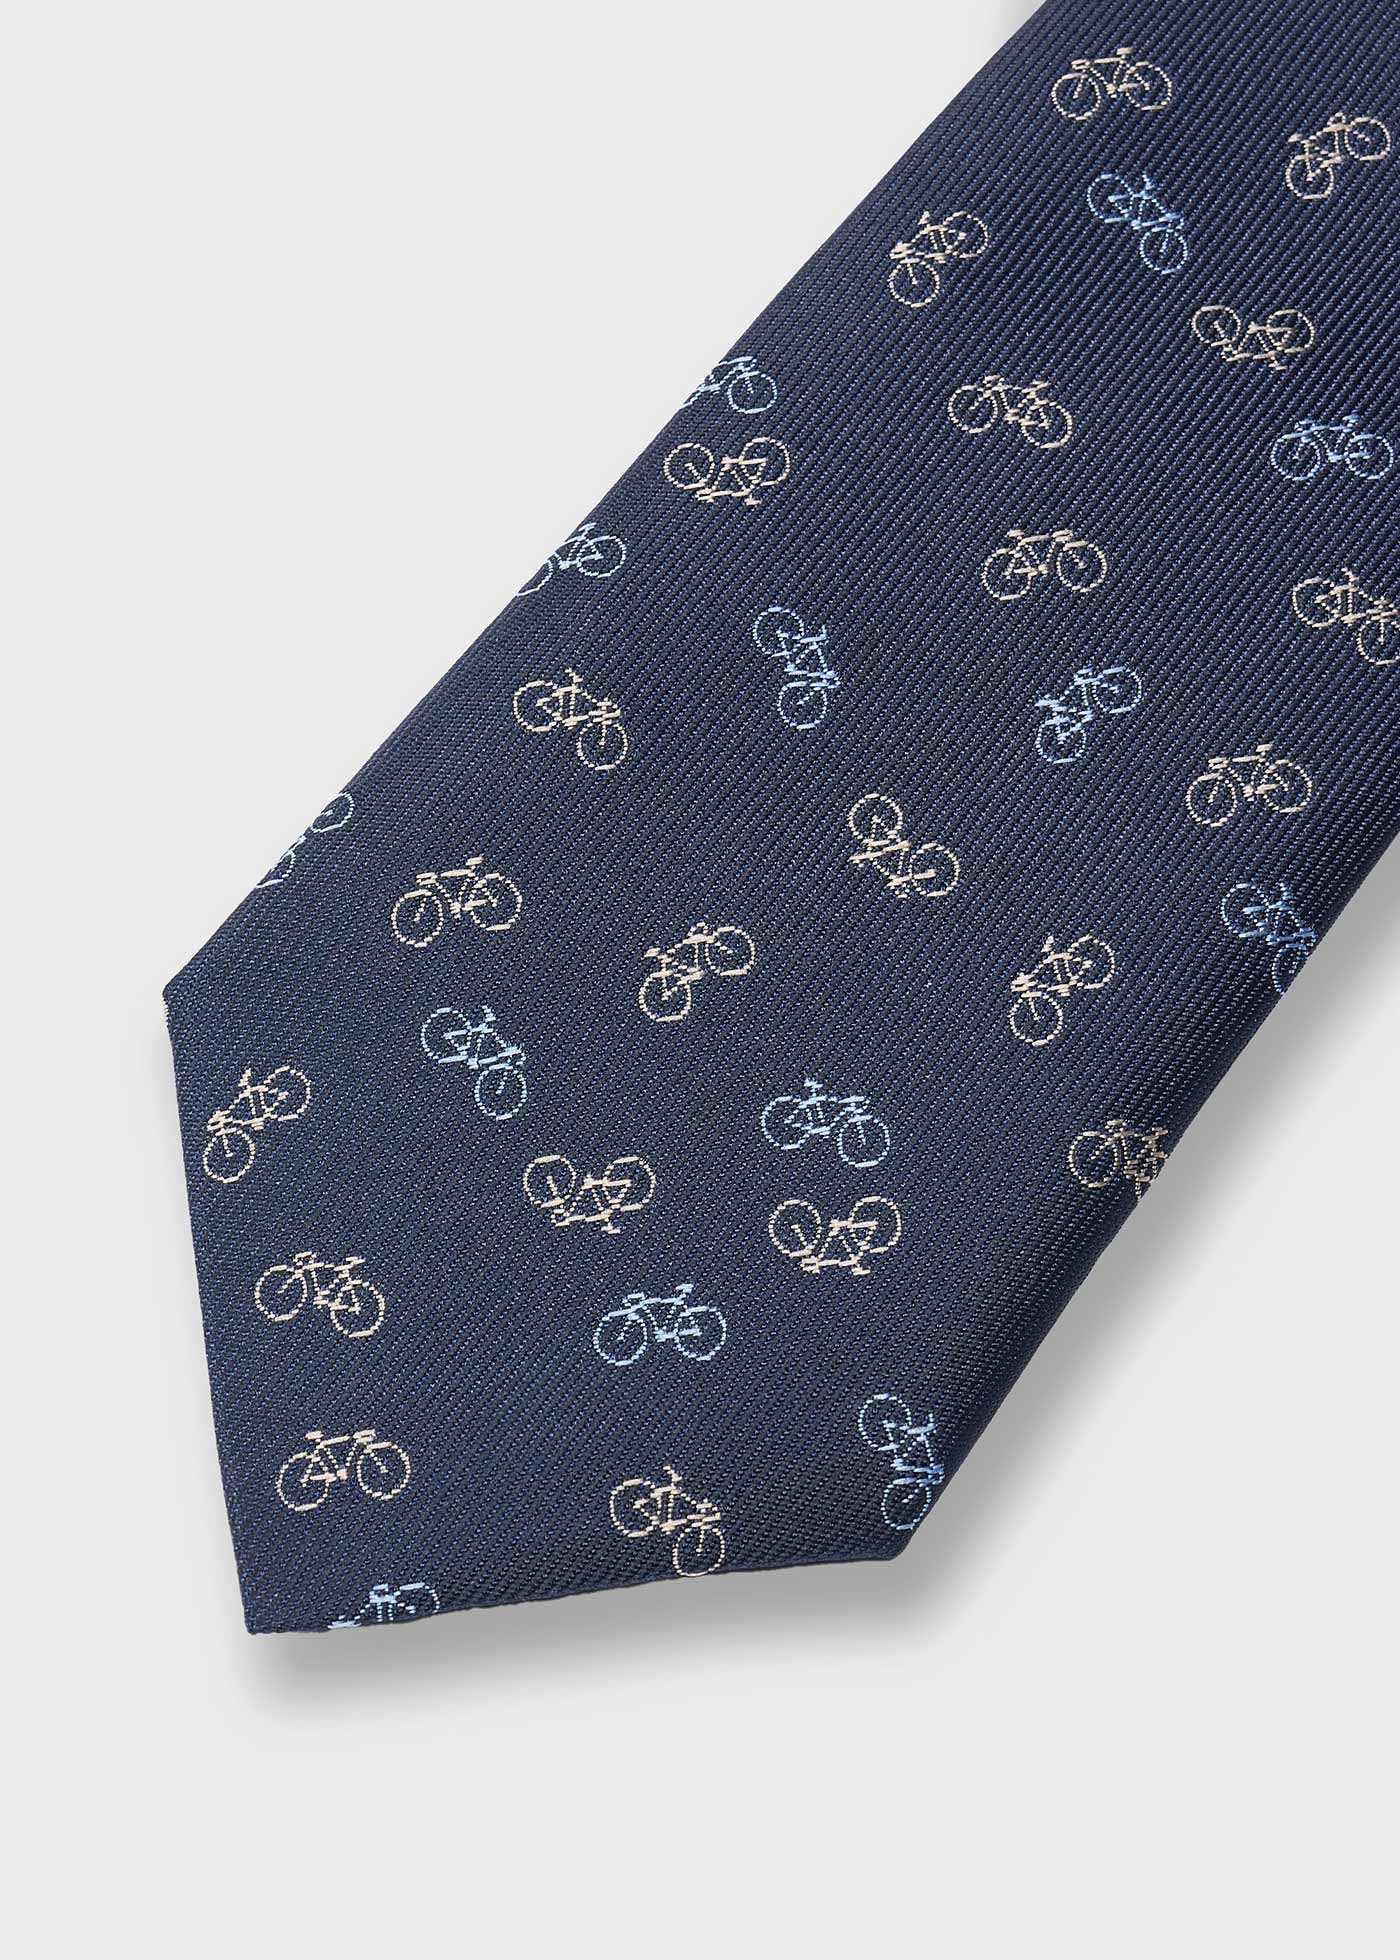 Cravate imprimée vélos garçon